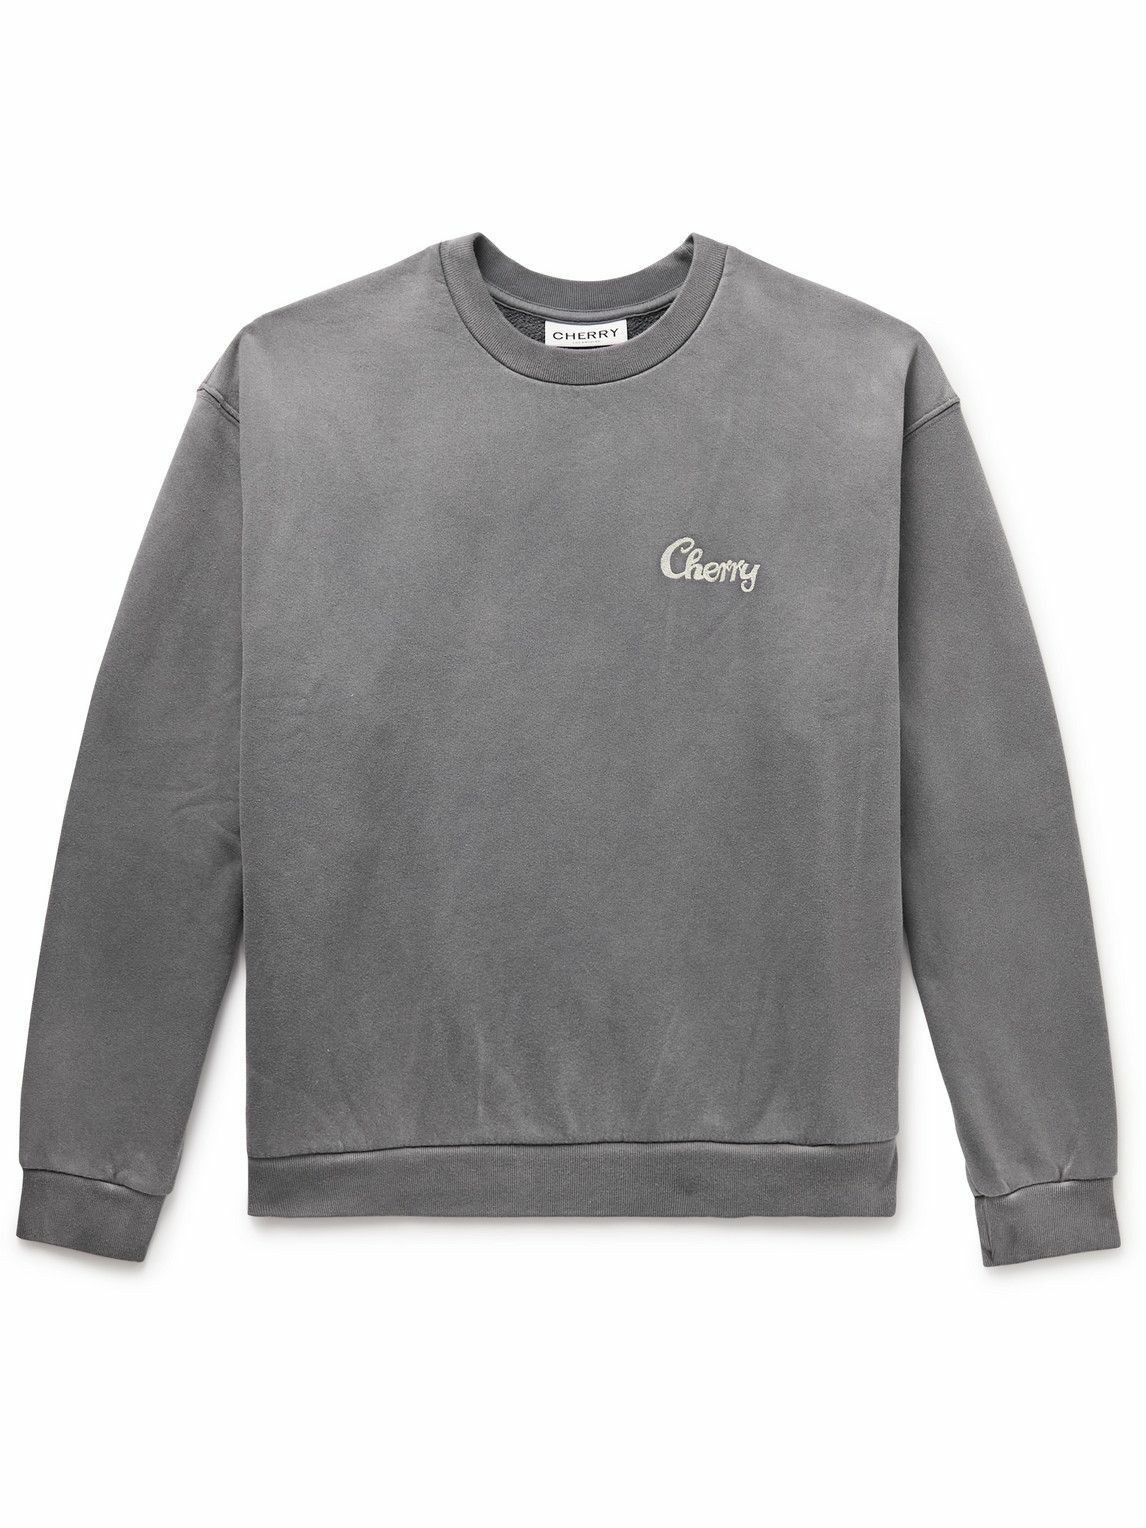 CHERRY LA - Logo-Print Cotton-Jersey Sweatshirt - Gray CHERRY LA